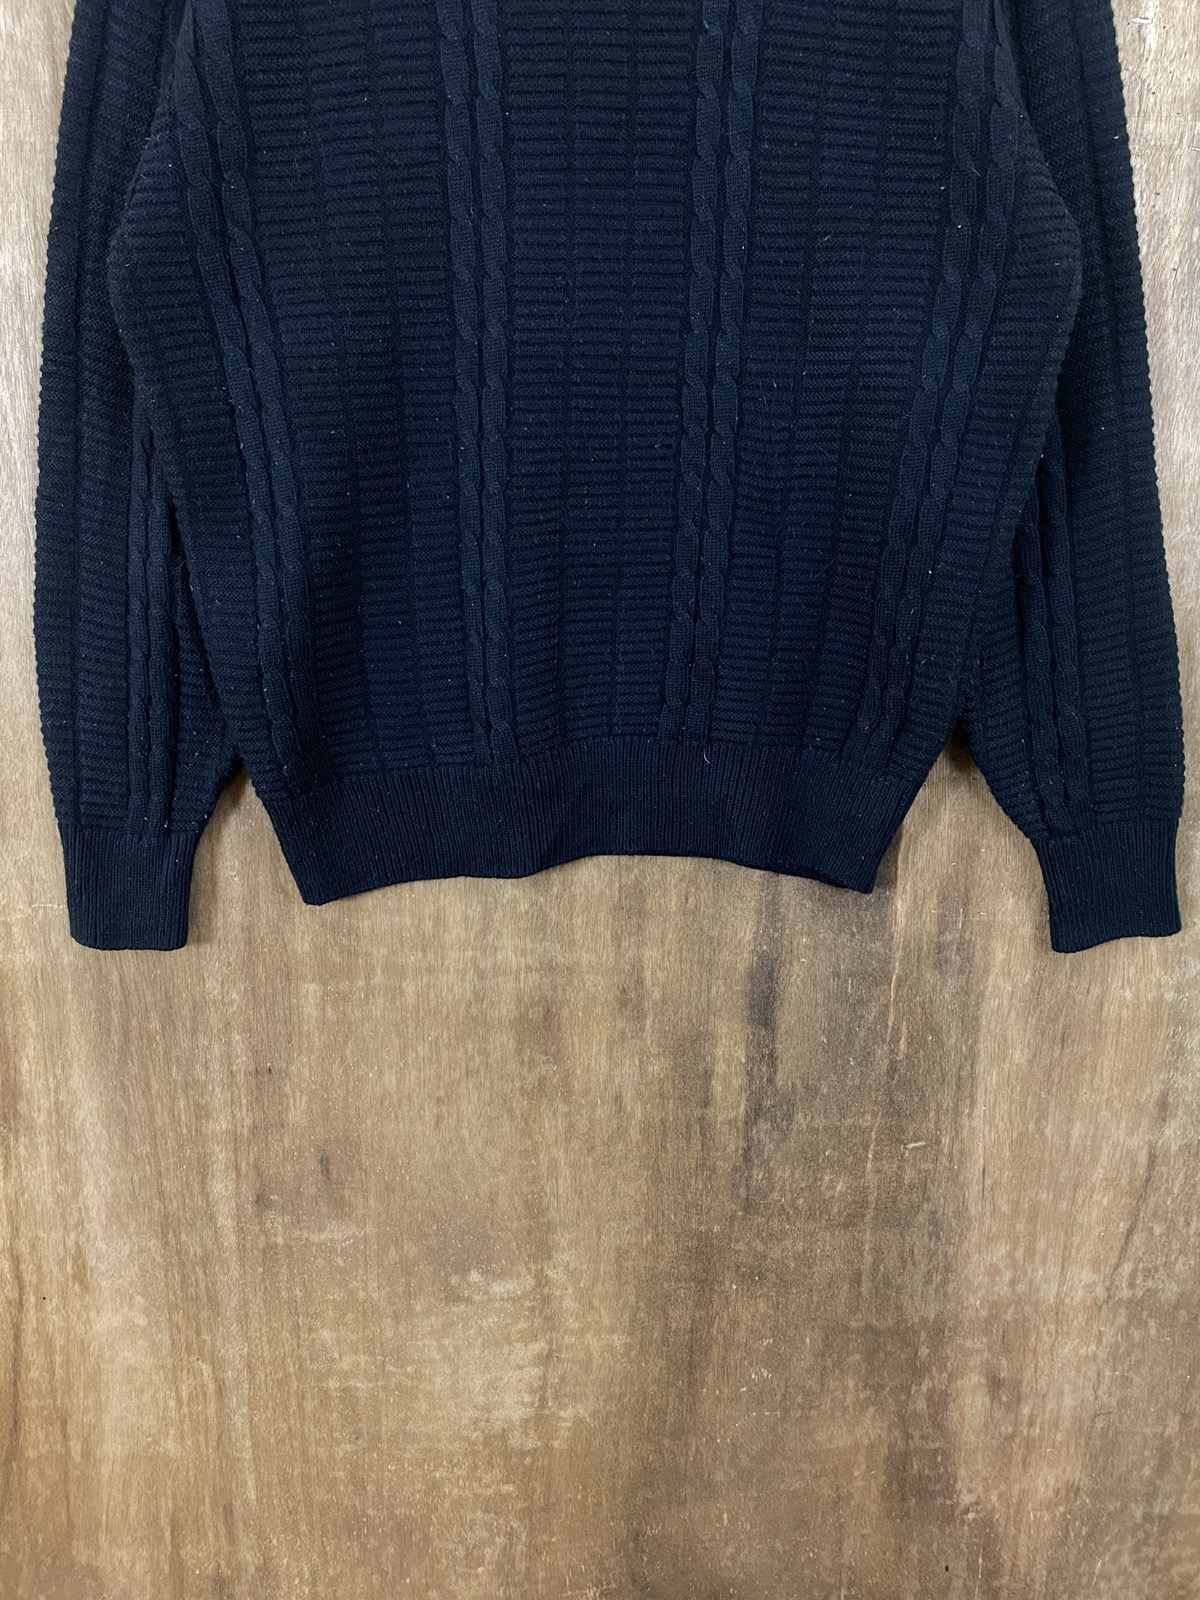 Japanese Brand - Japanese Brand Black Knit Sweaters #1587 - 3